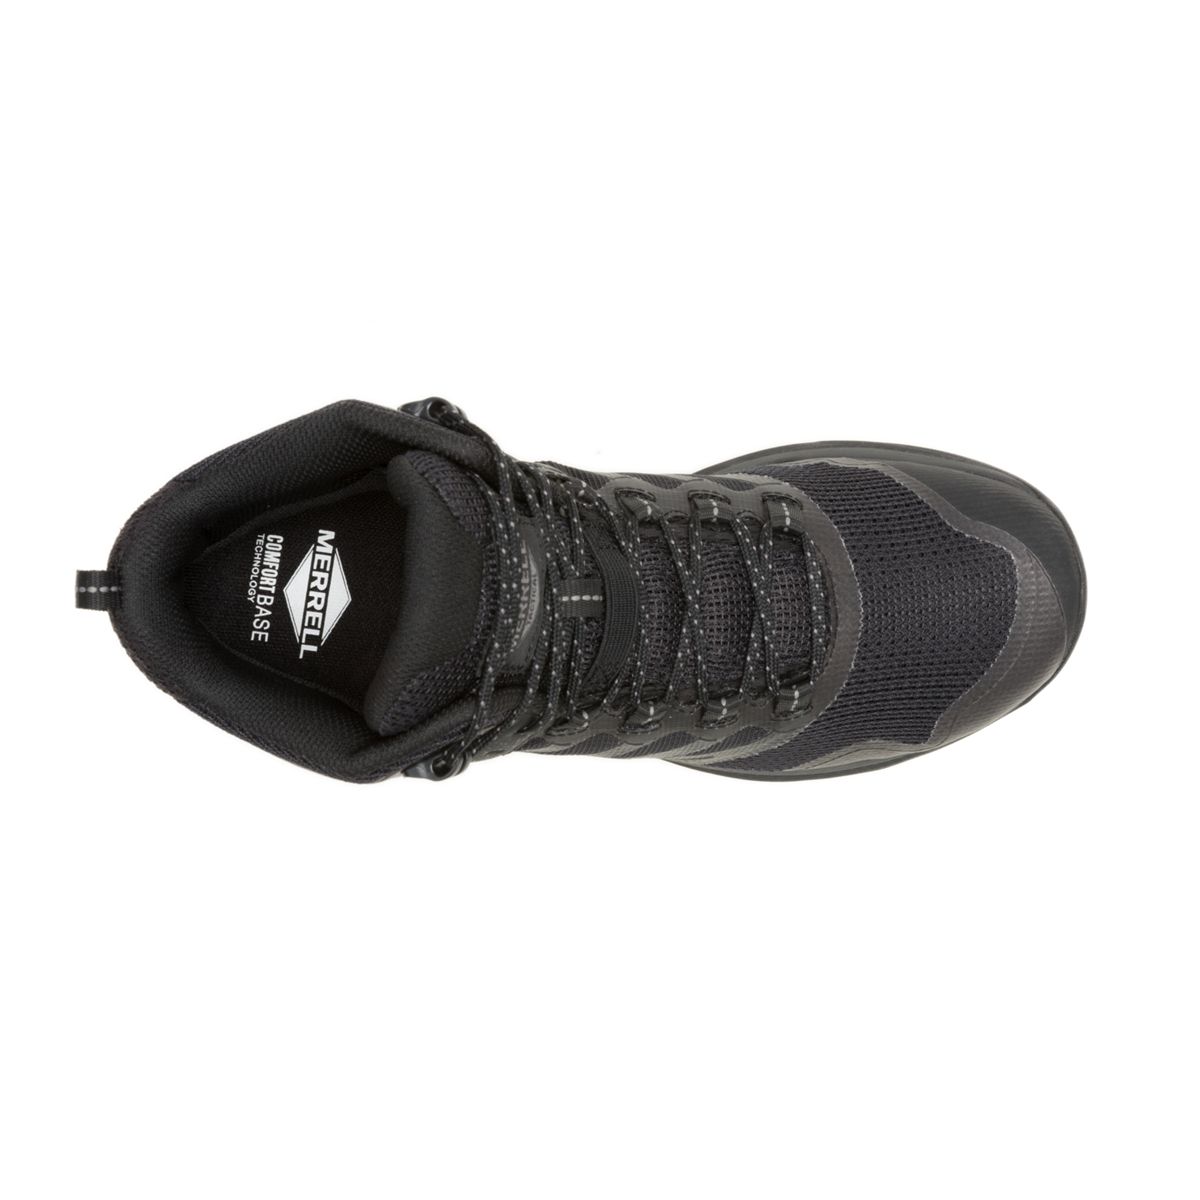 Nova 3 Mid Tactical Waterproof Boot, Black/Charcoal, dynamic 3